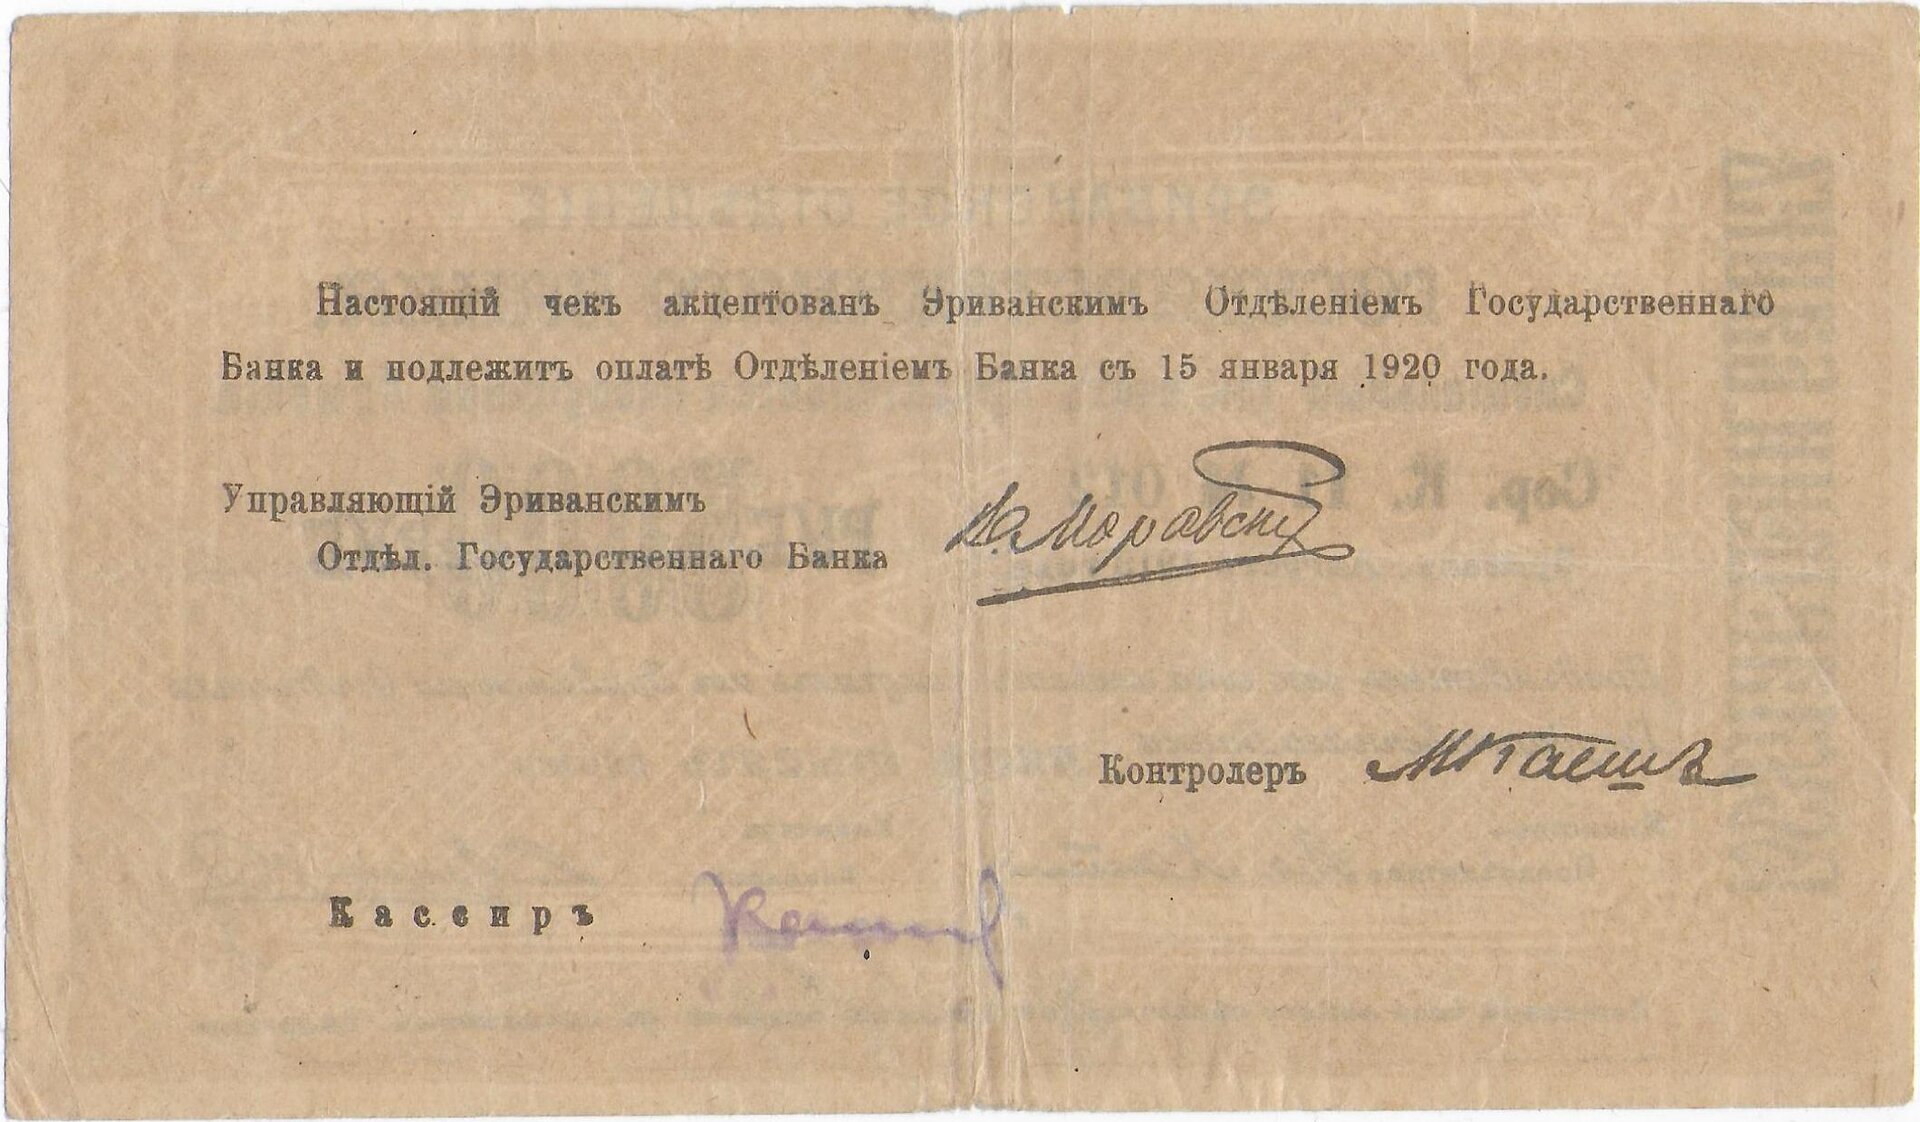 ARMENIA  Autonomous Republic   5000 Rubles 1919 (1920)   P.28  back.jpg